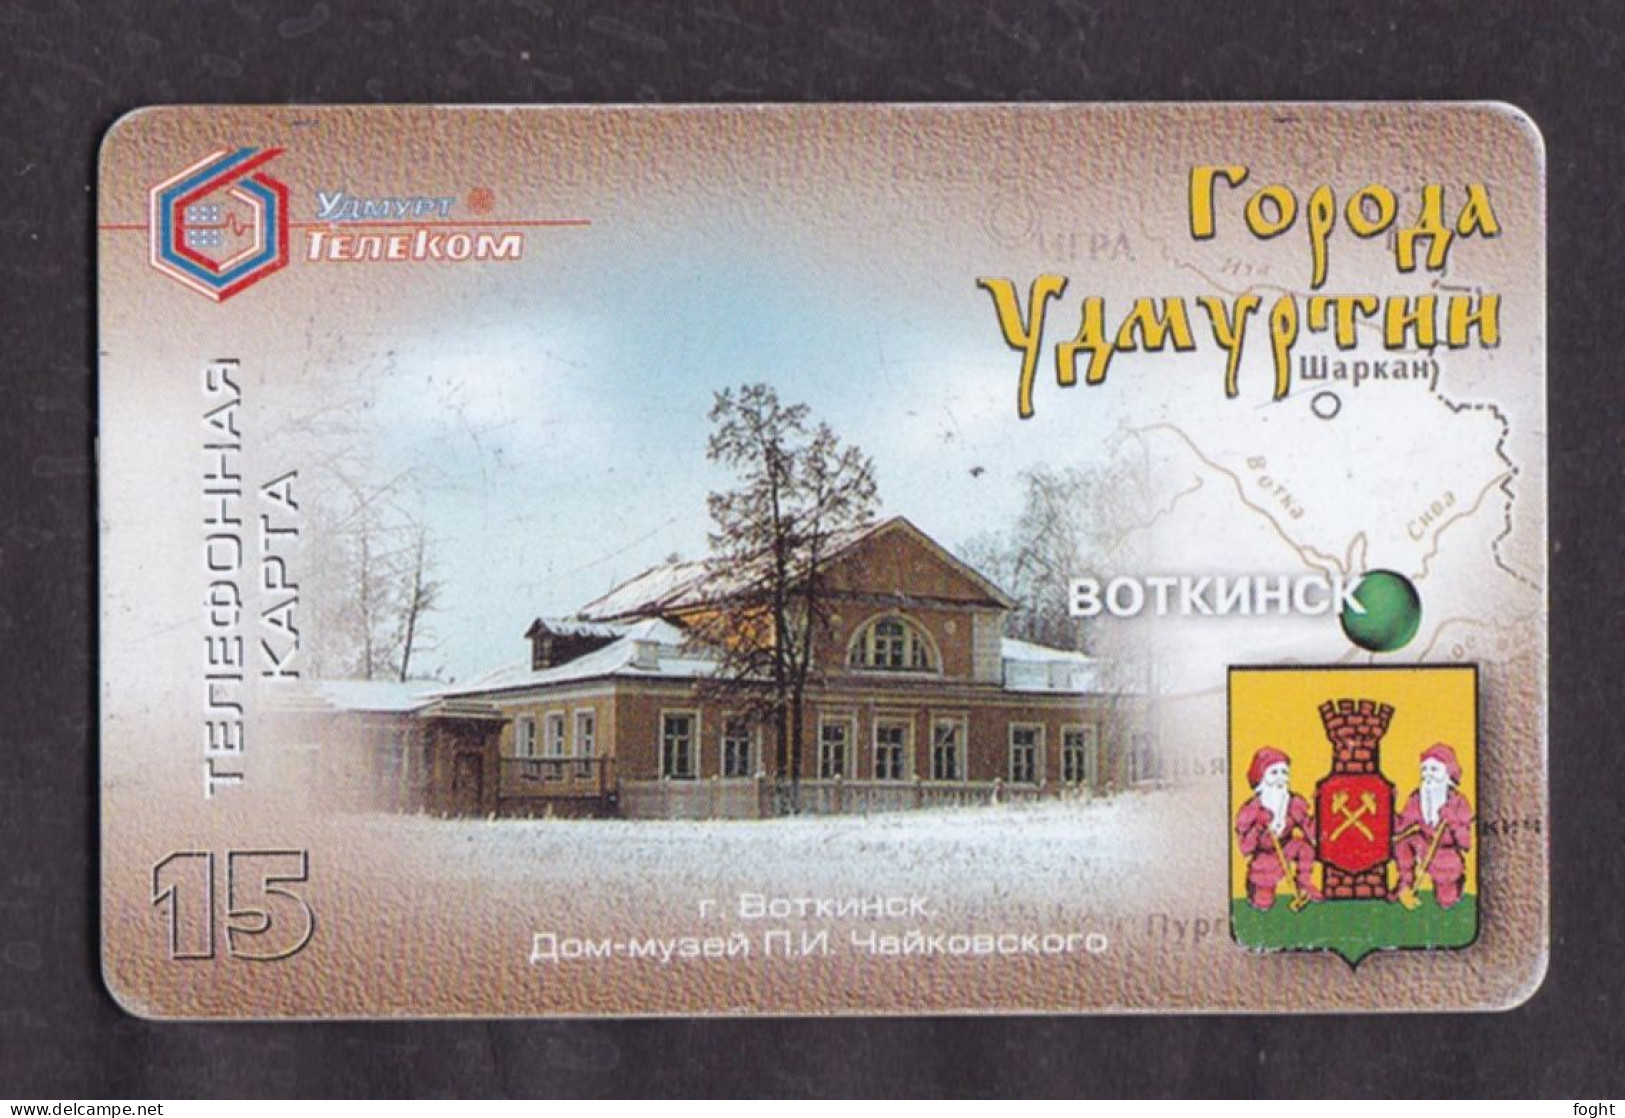 2000 Remote Memory Russia ,Udmurt Telecom-Izhevsk,Votkinsk,15 Units Card,Col:RU-PRE-UDM-0019 - Russland